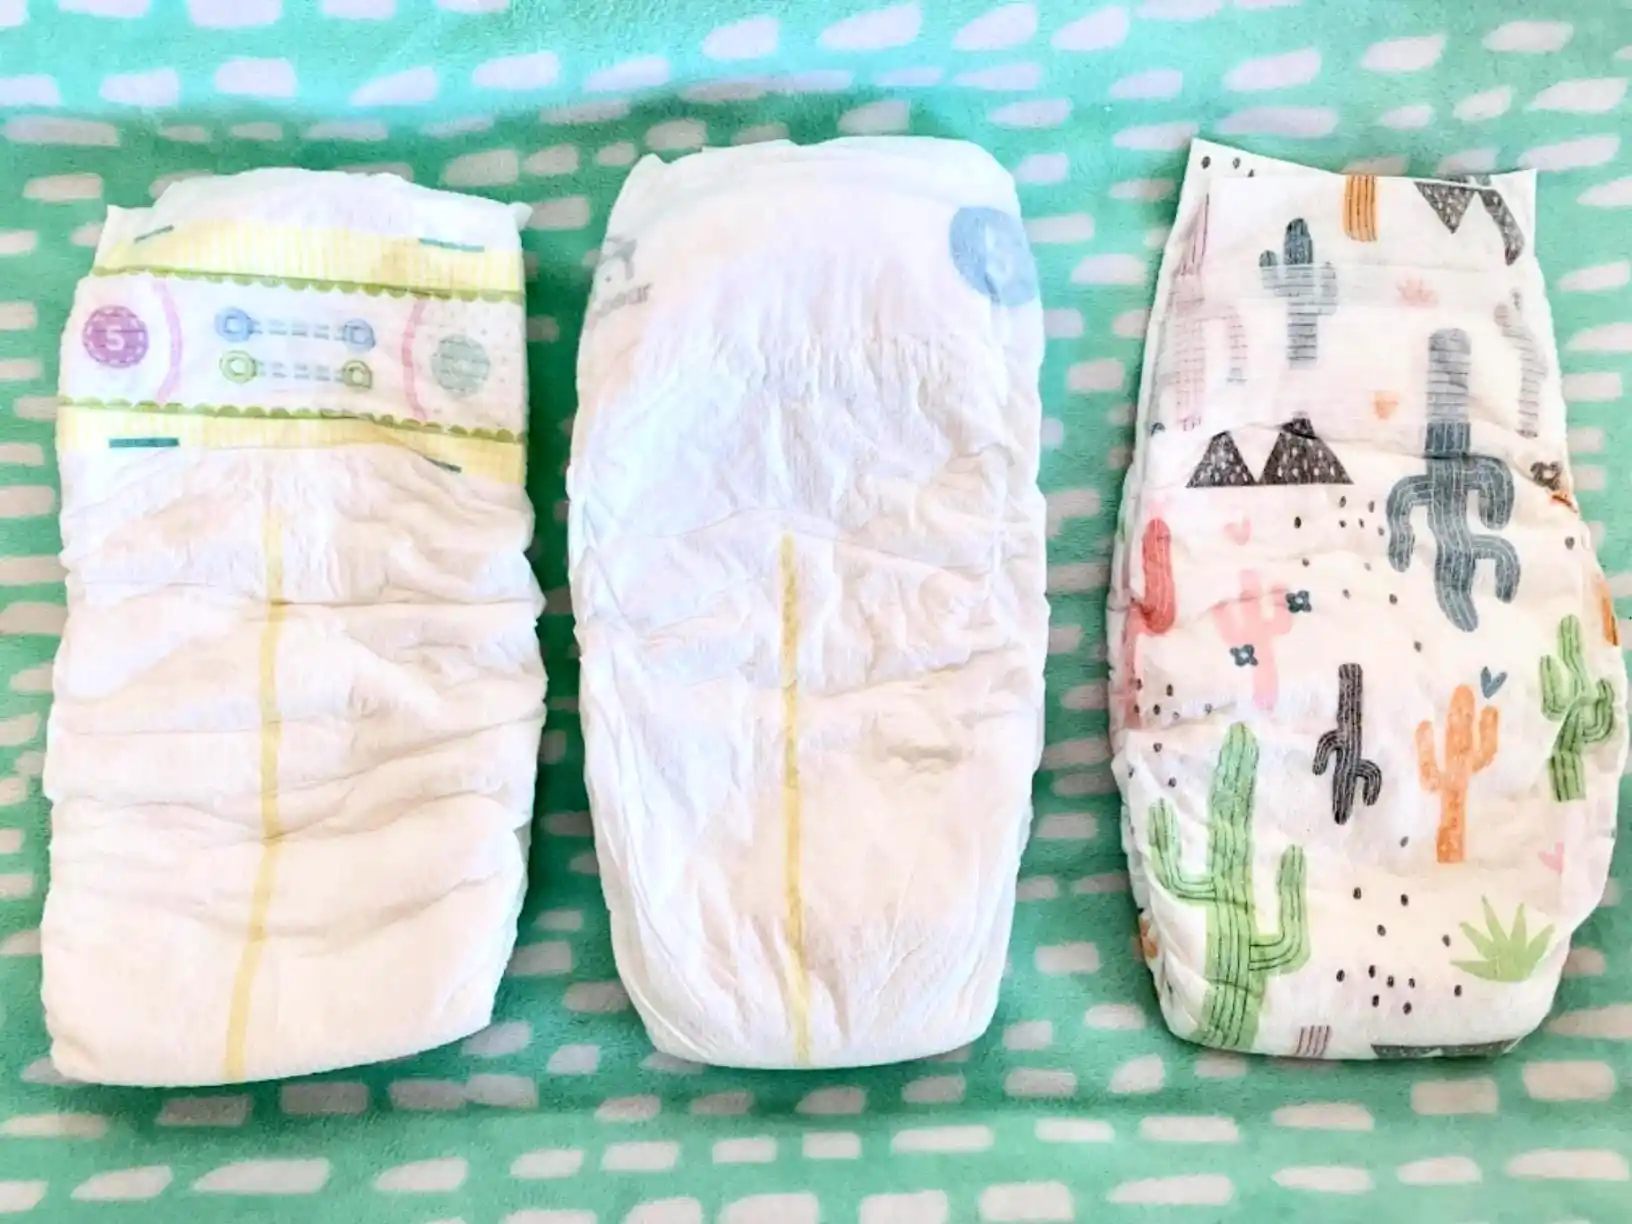 When Do Costco Diapers Go On Sale?